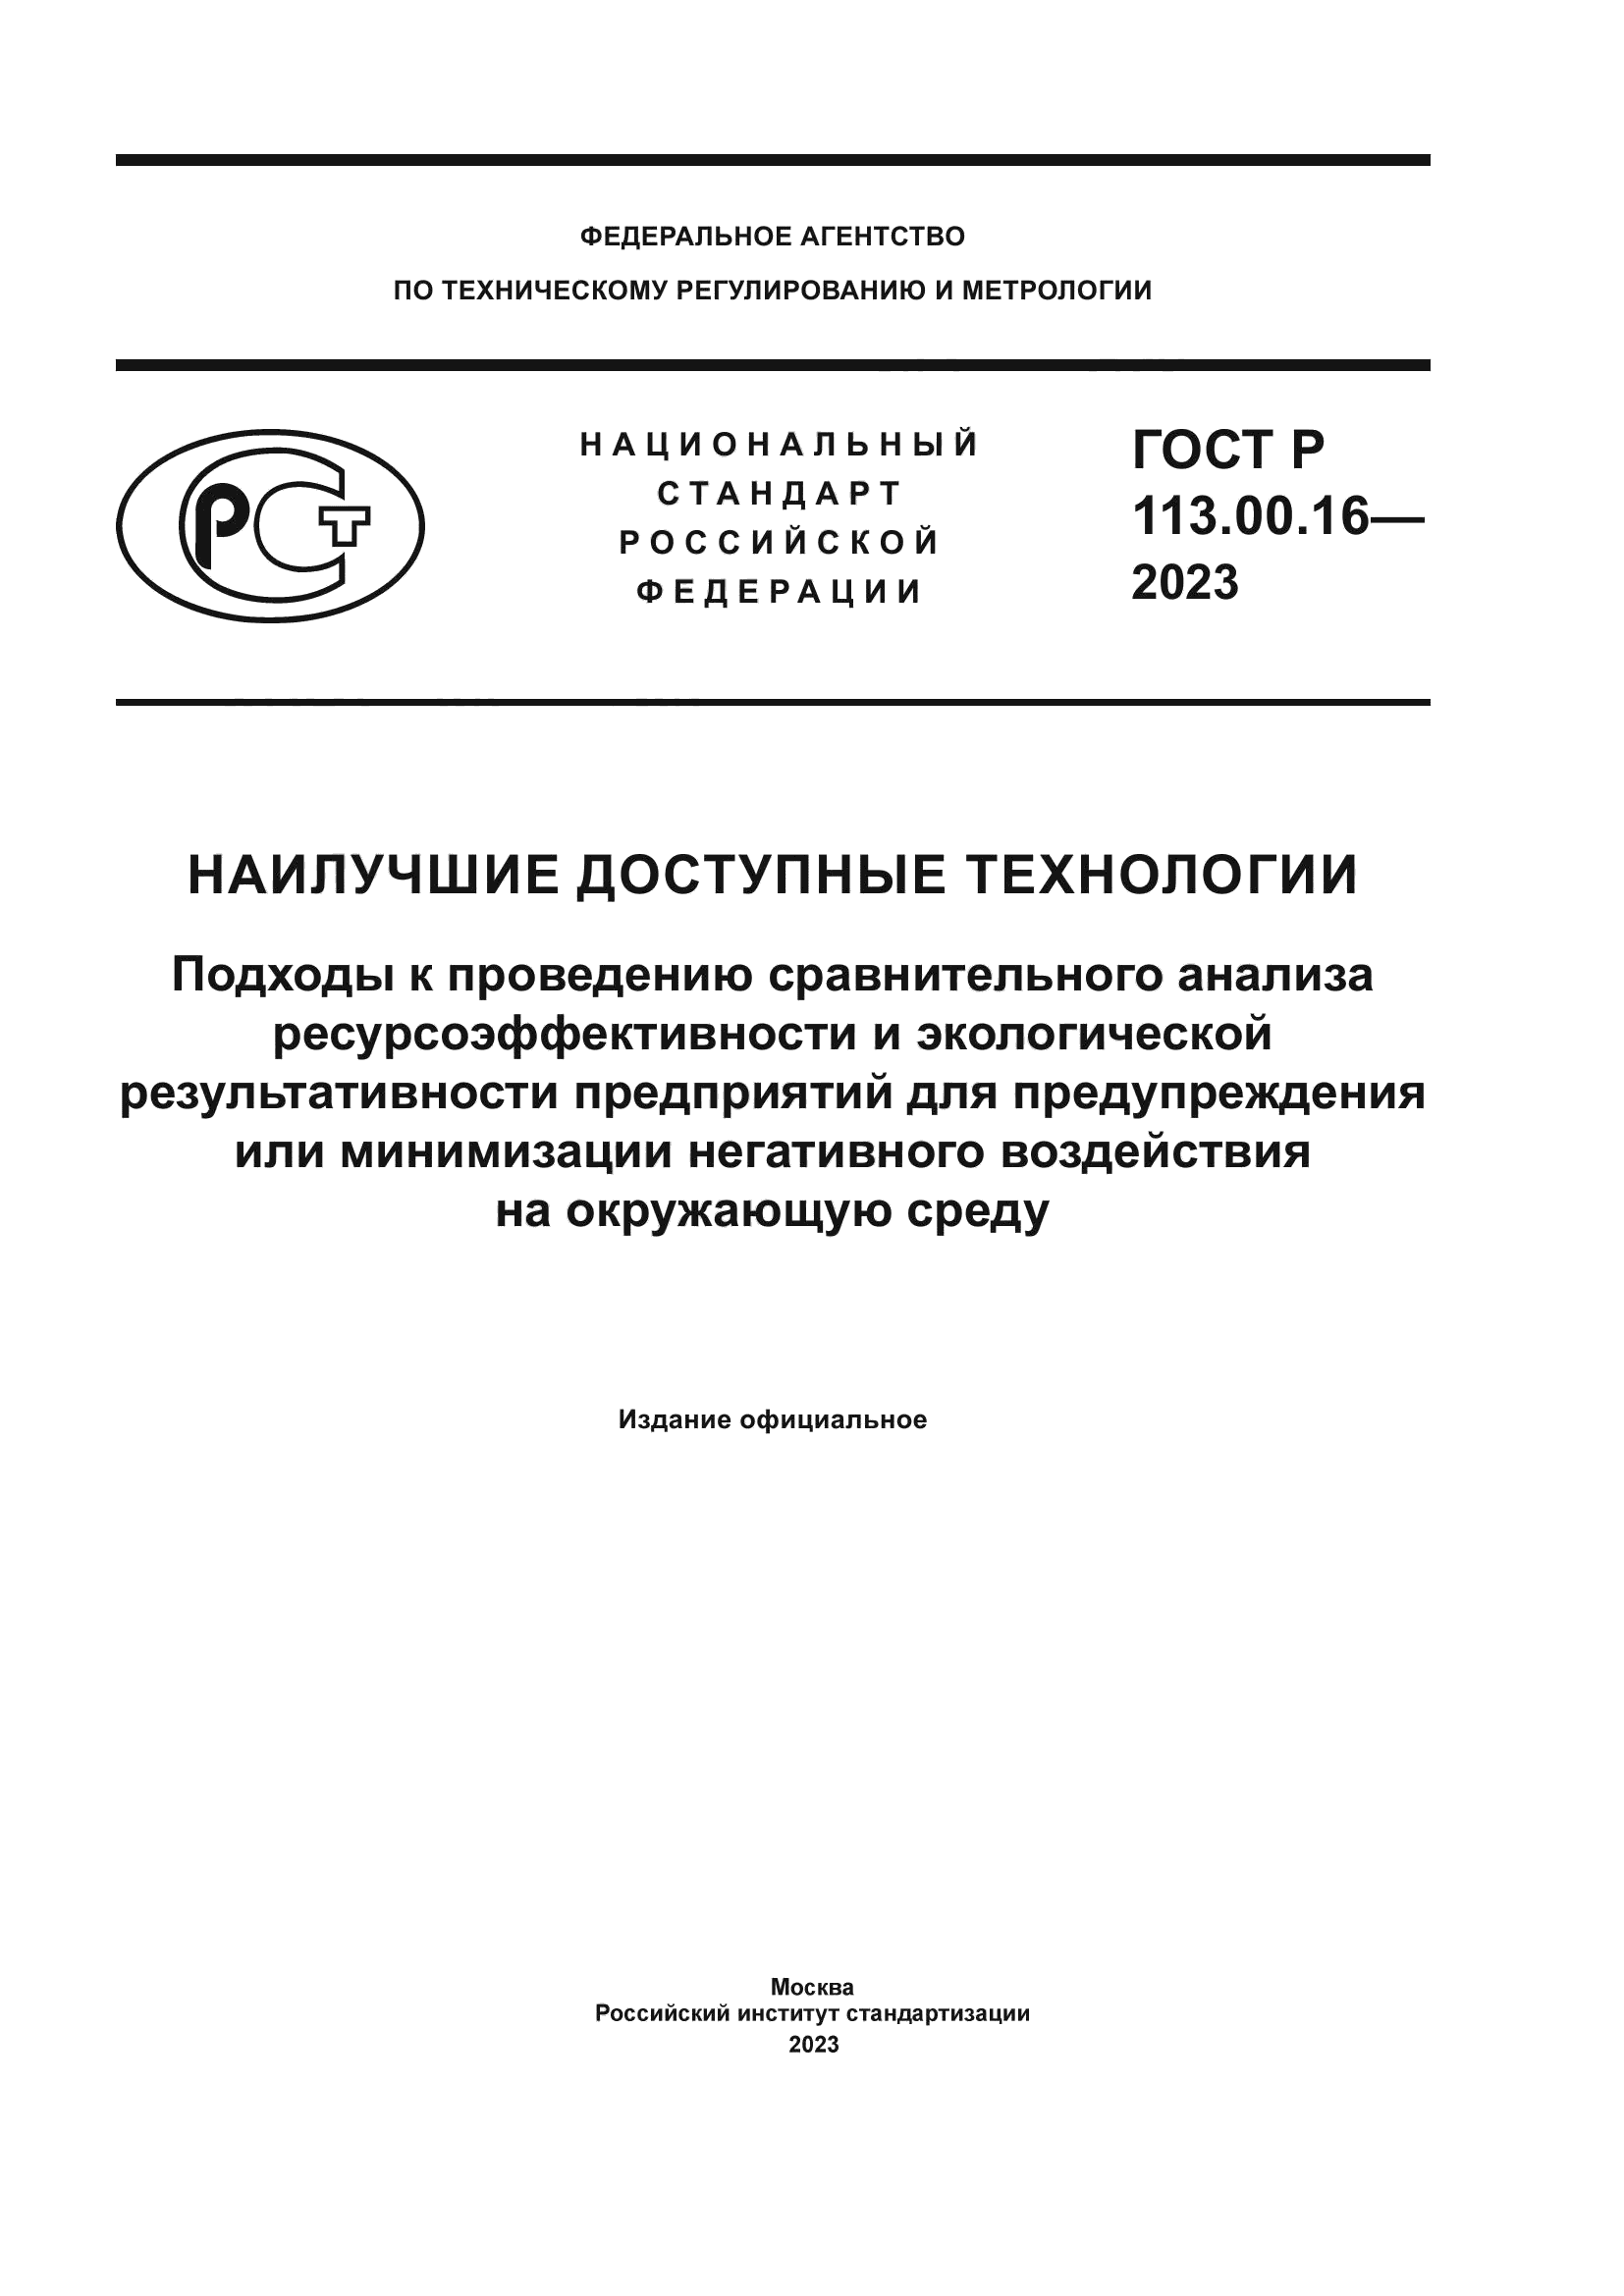 ГОСТ Р 113.00.16-2023